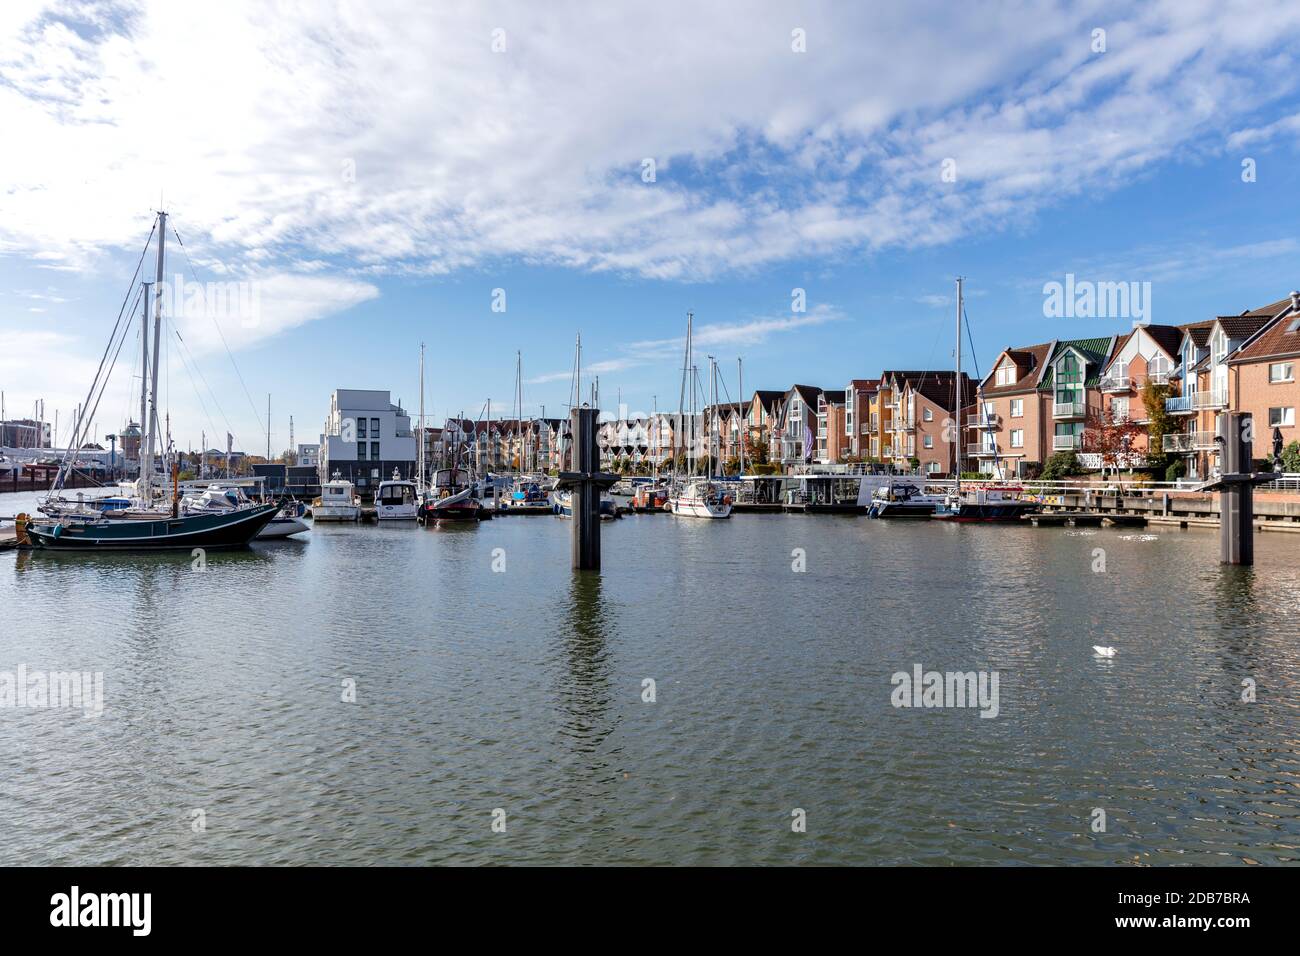 City-Marina in Cuxhaven, Germany Stock Photo